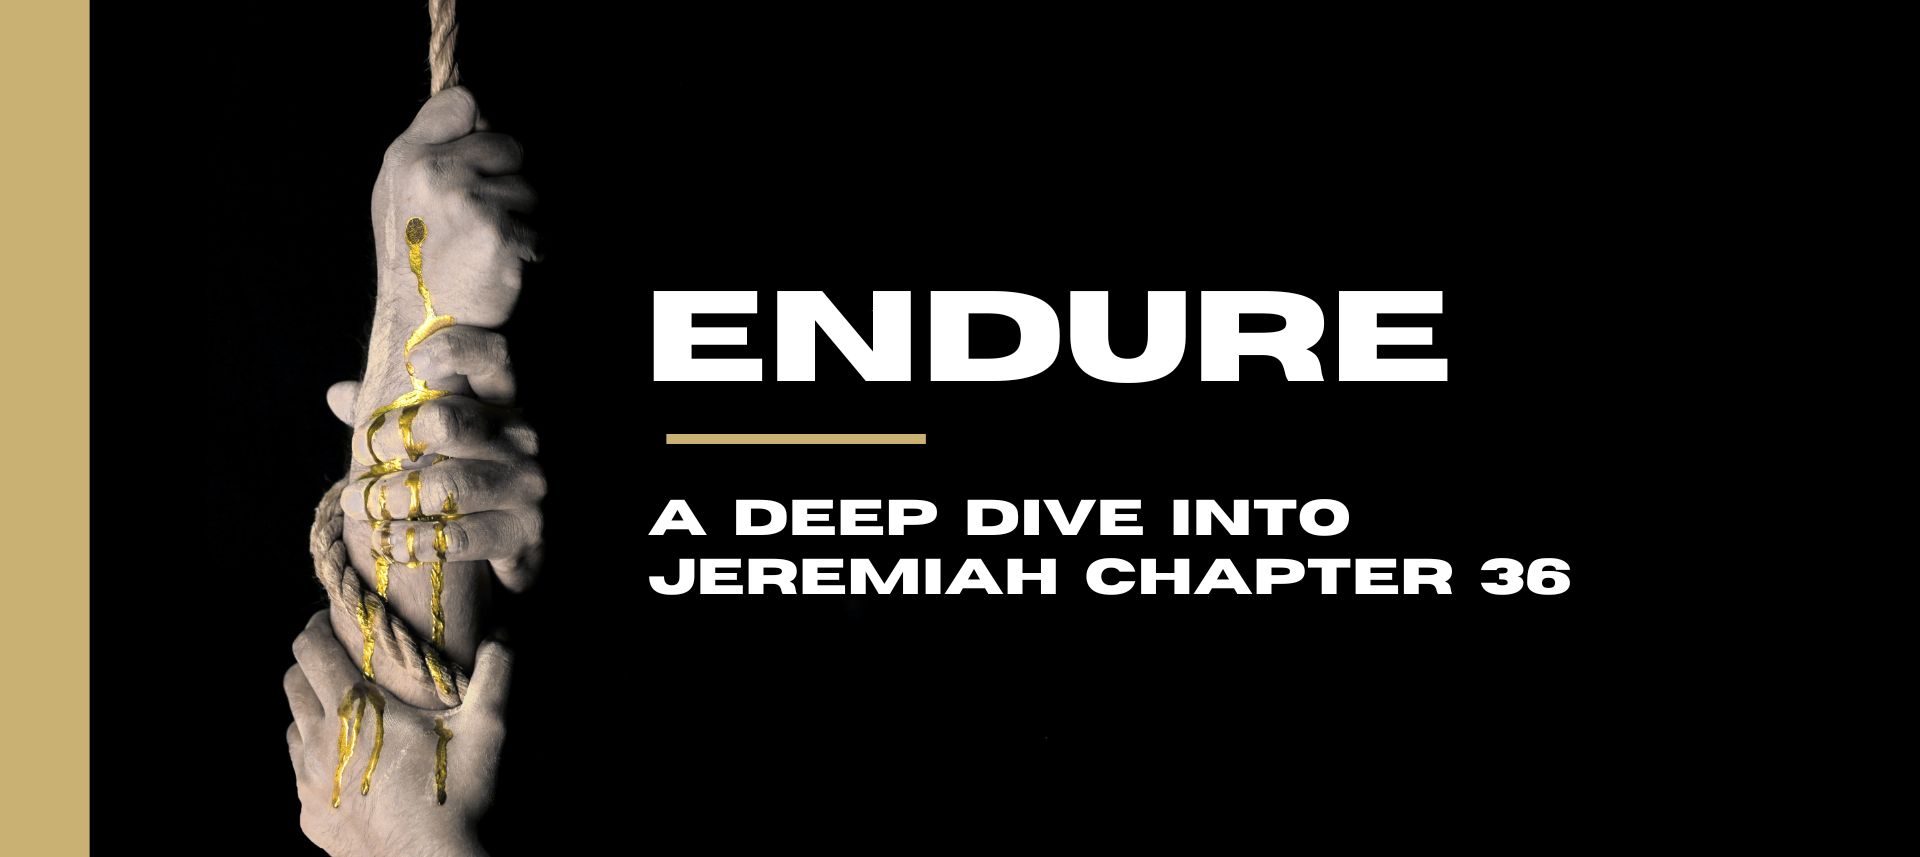 Endure - A Deep Dive into Jeremiah Chapter 36